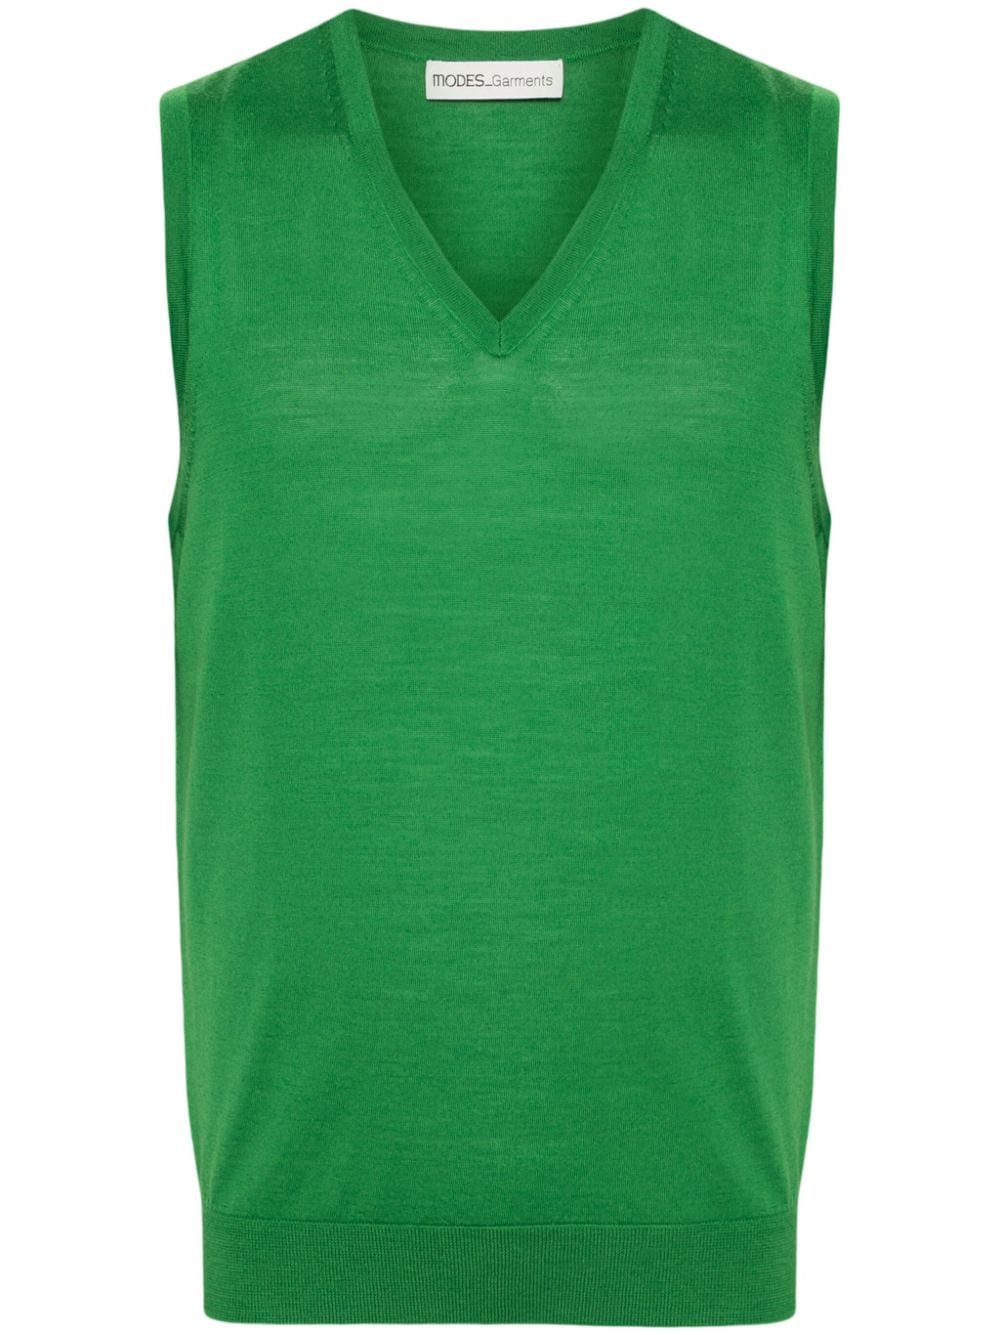 Modes Garments Sleeveless Merino Knitted Waistcoat In Green